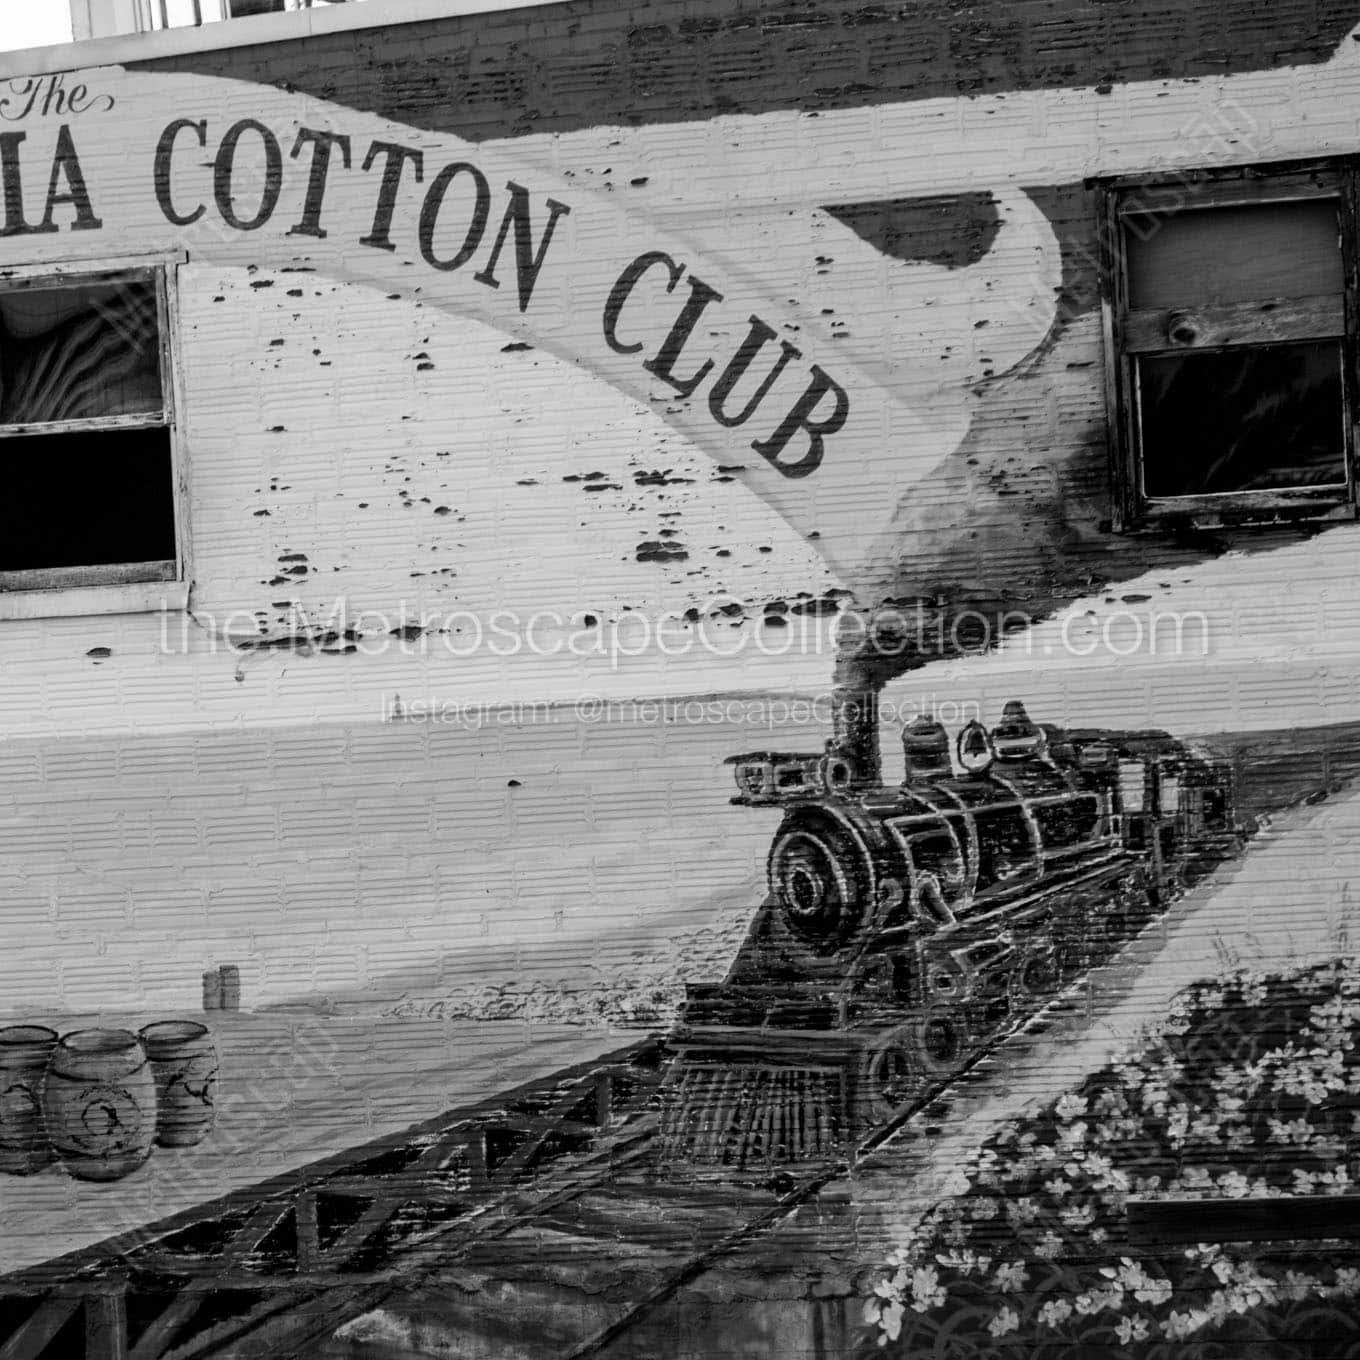 magnolia cotton club mural Black & White Office Art